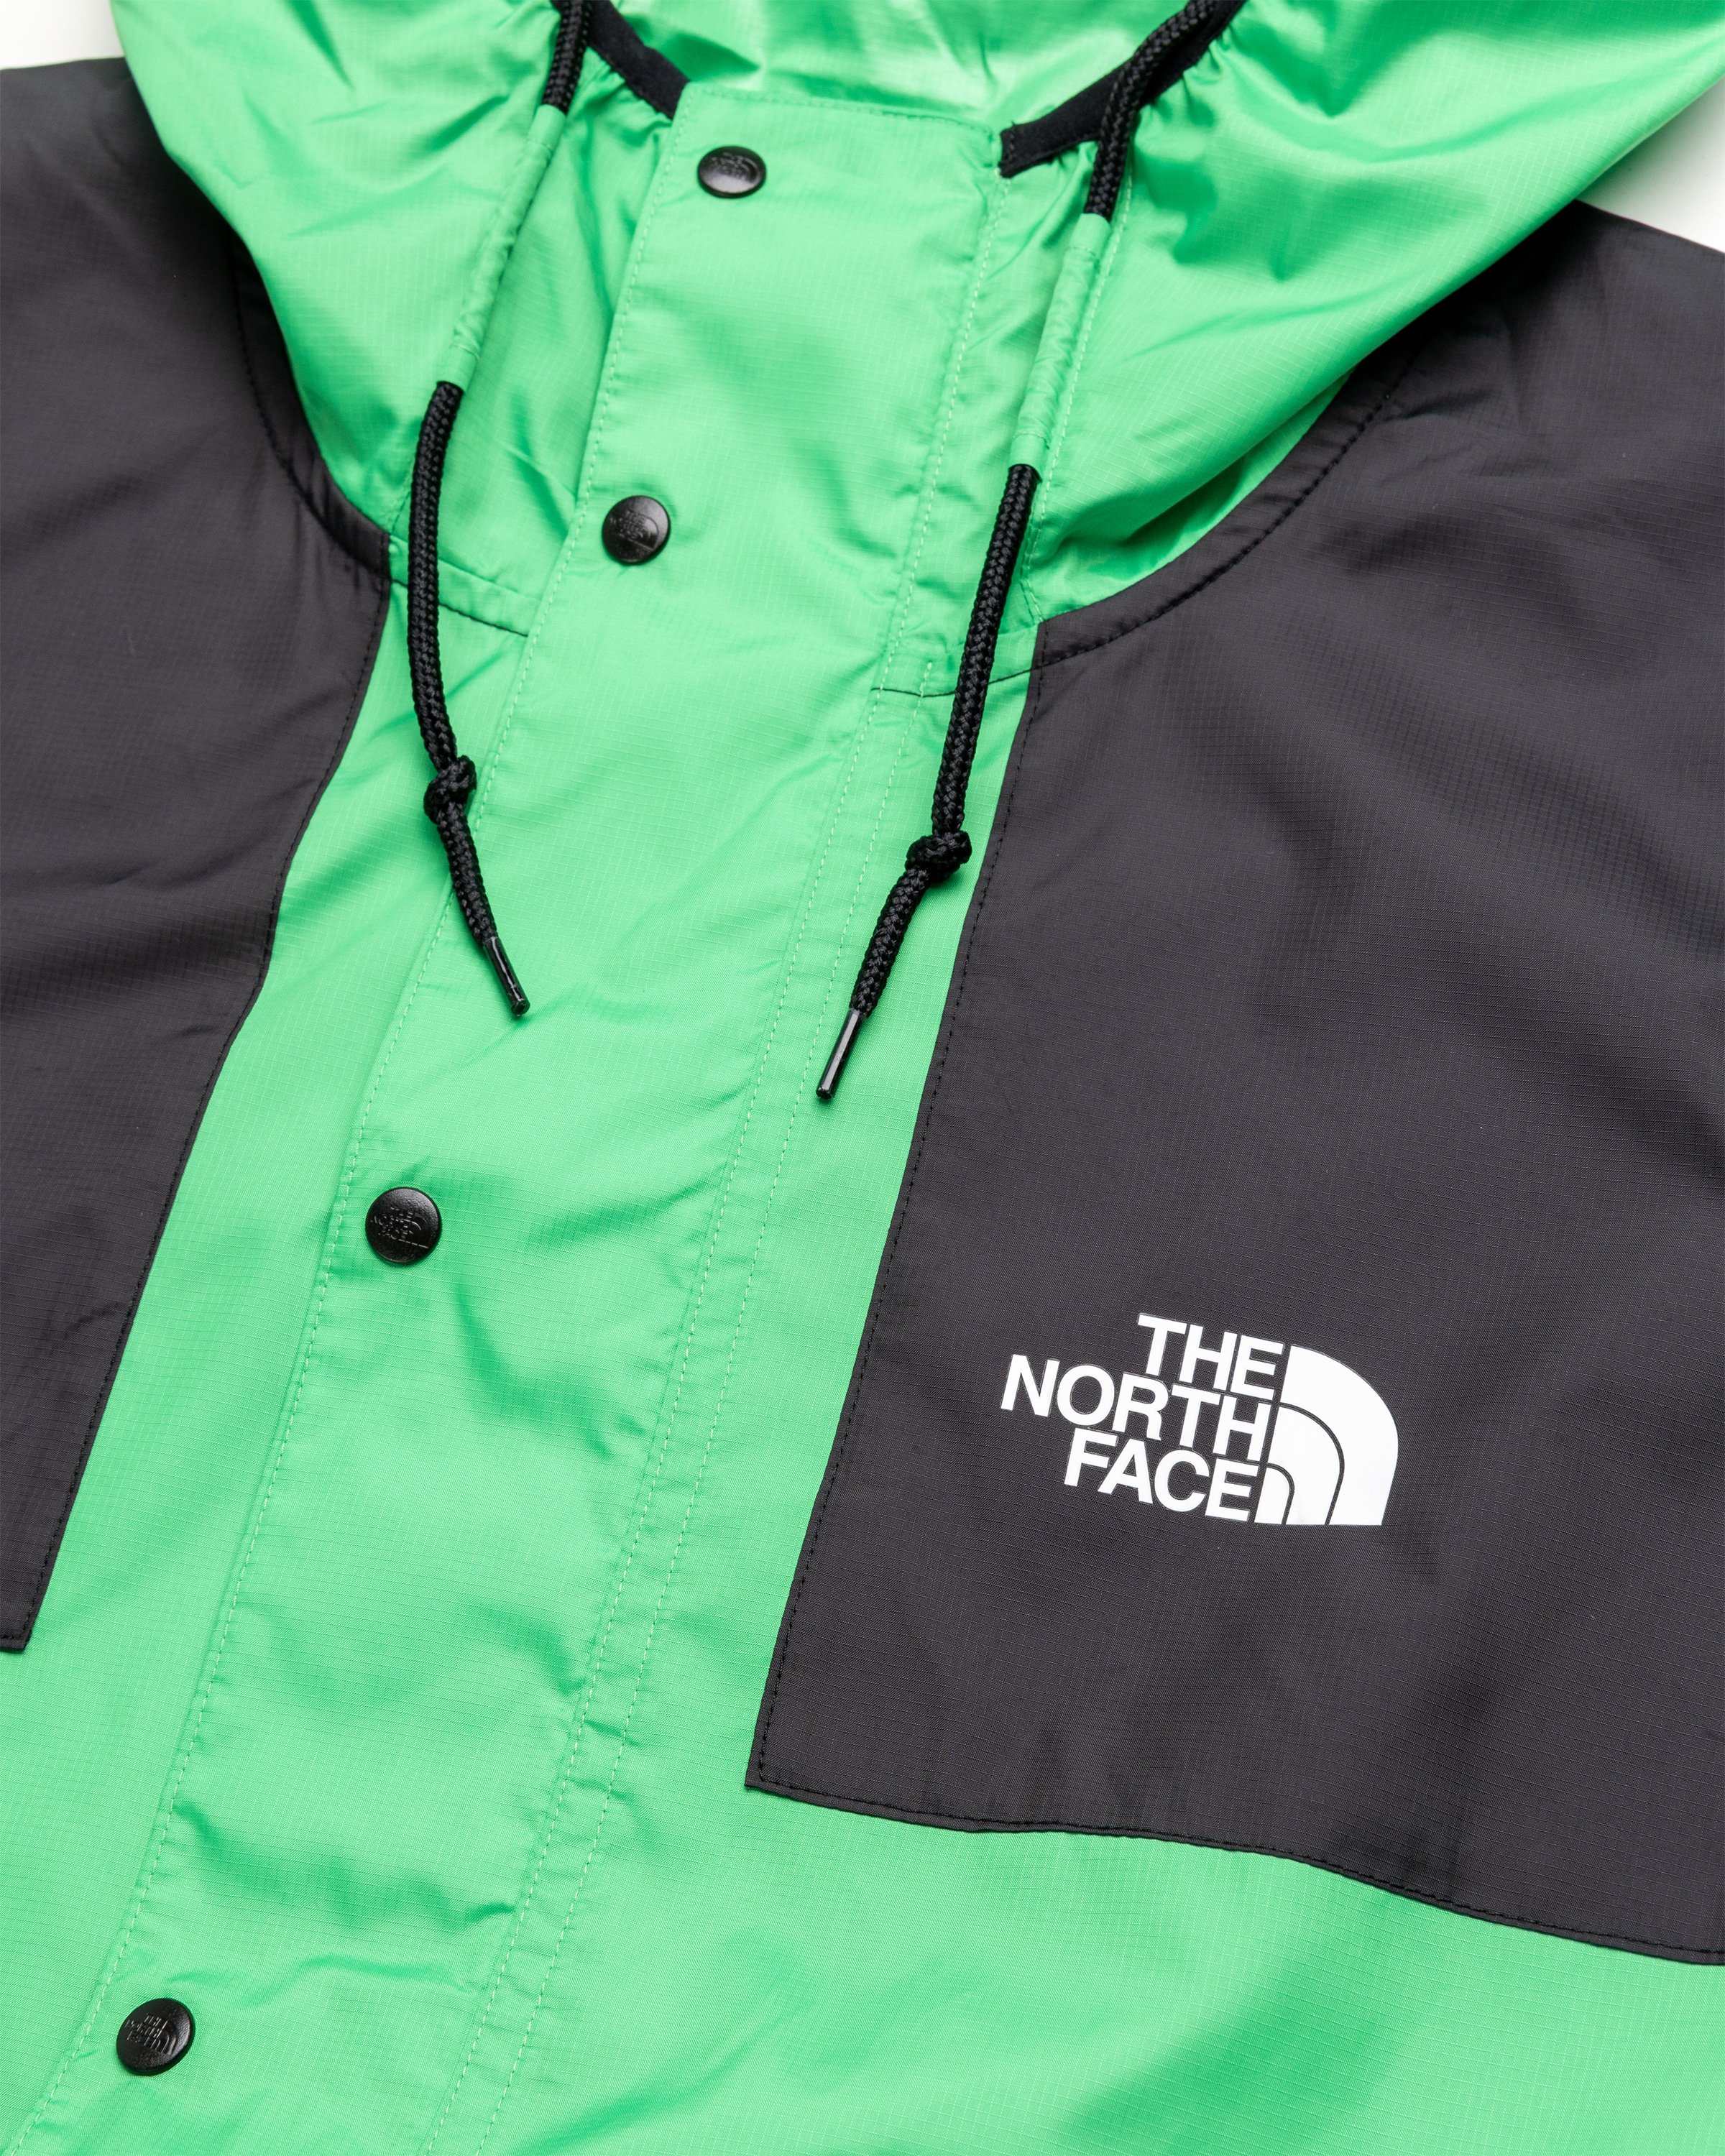 The North Face - M SEASONAL MOUNTAIN JACKET - EU OPTIC EMERALD - Clothing - Green - Image 6